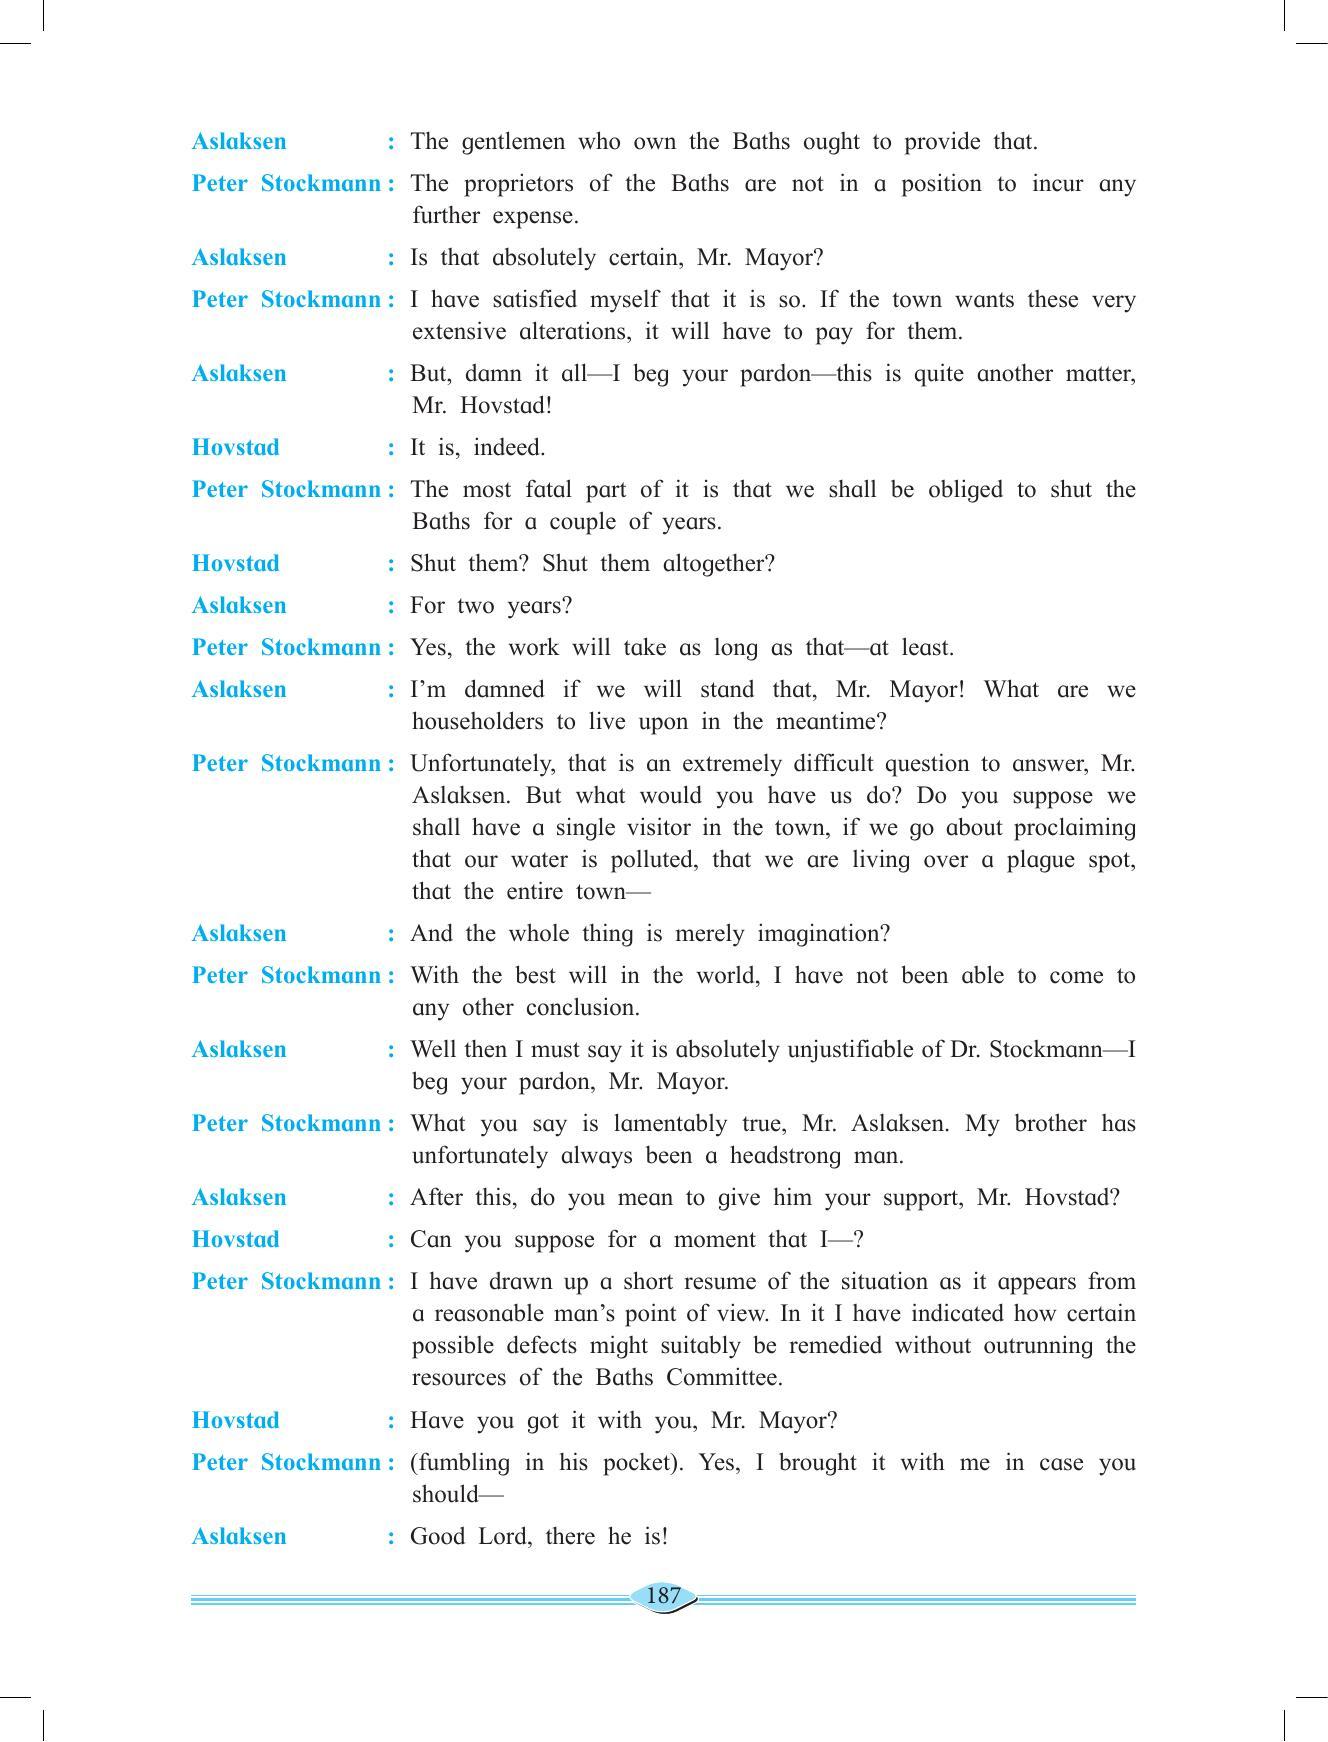 Maharashtra Board Class 11 English Textbook - Page 201